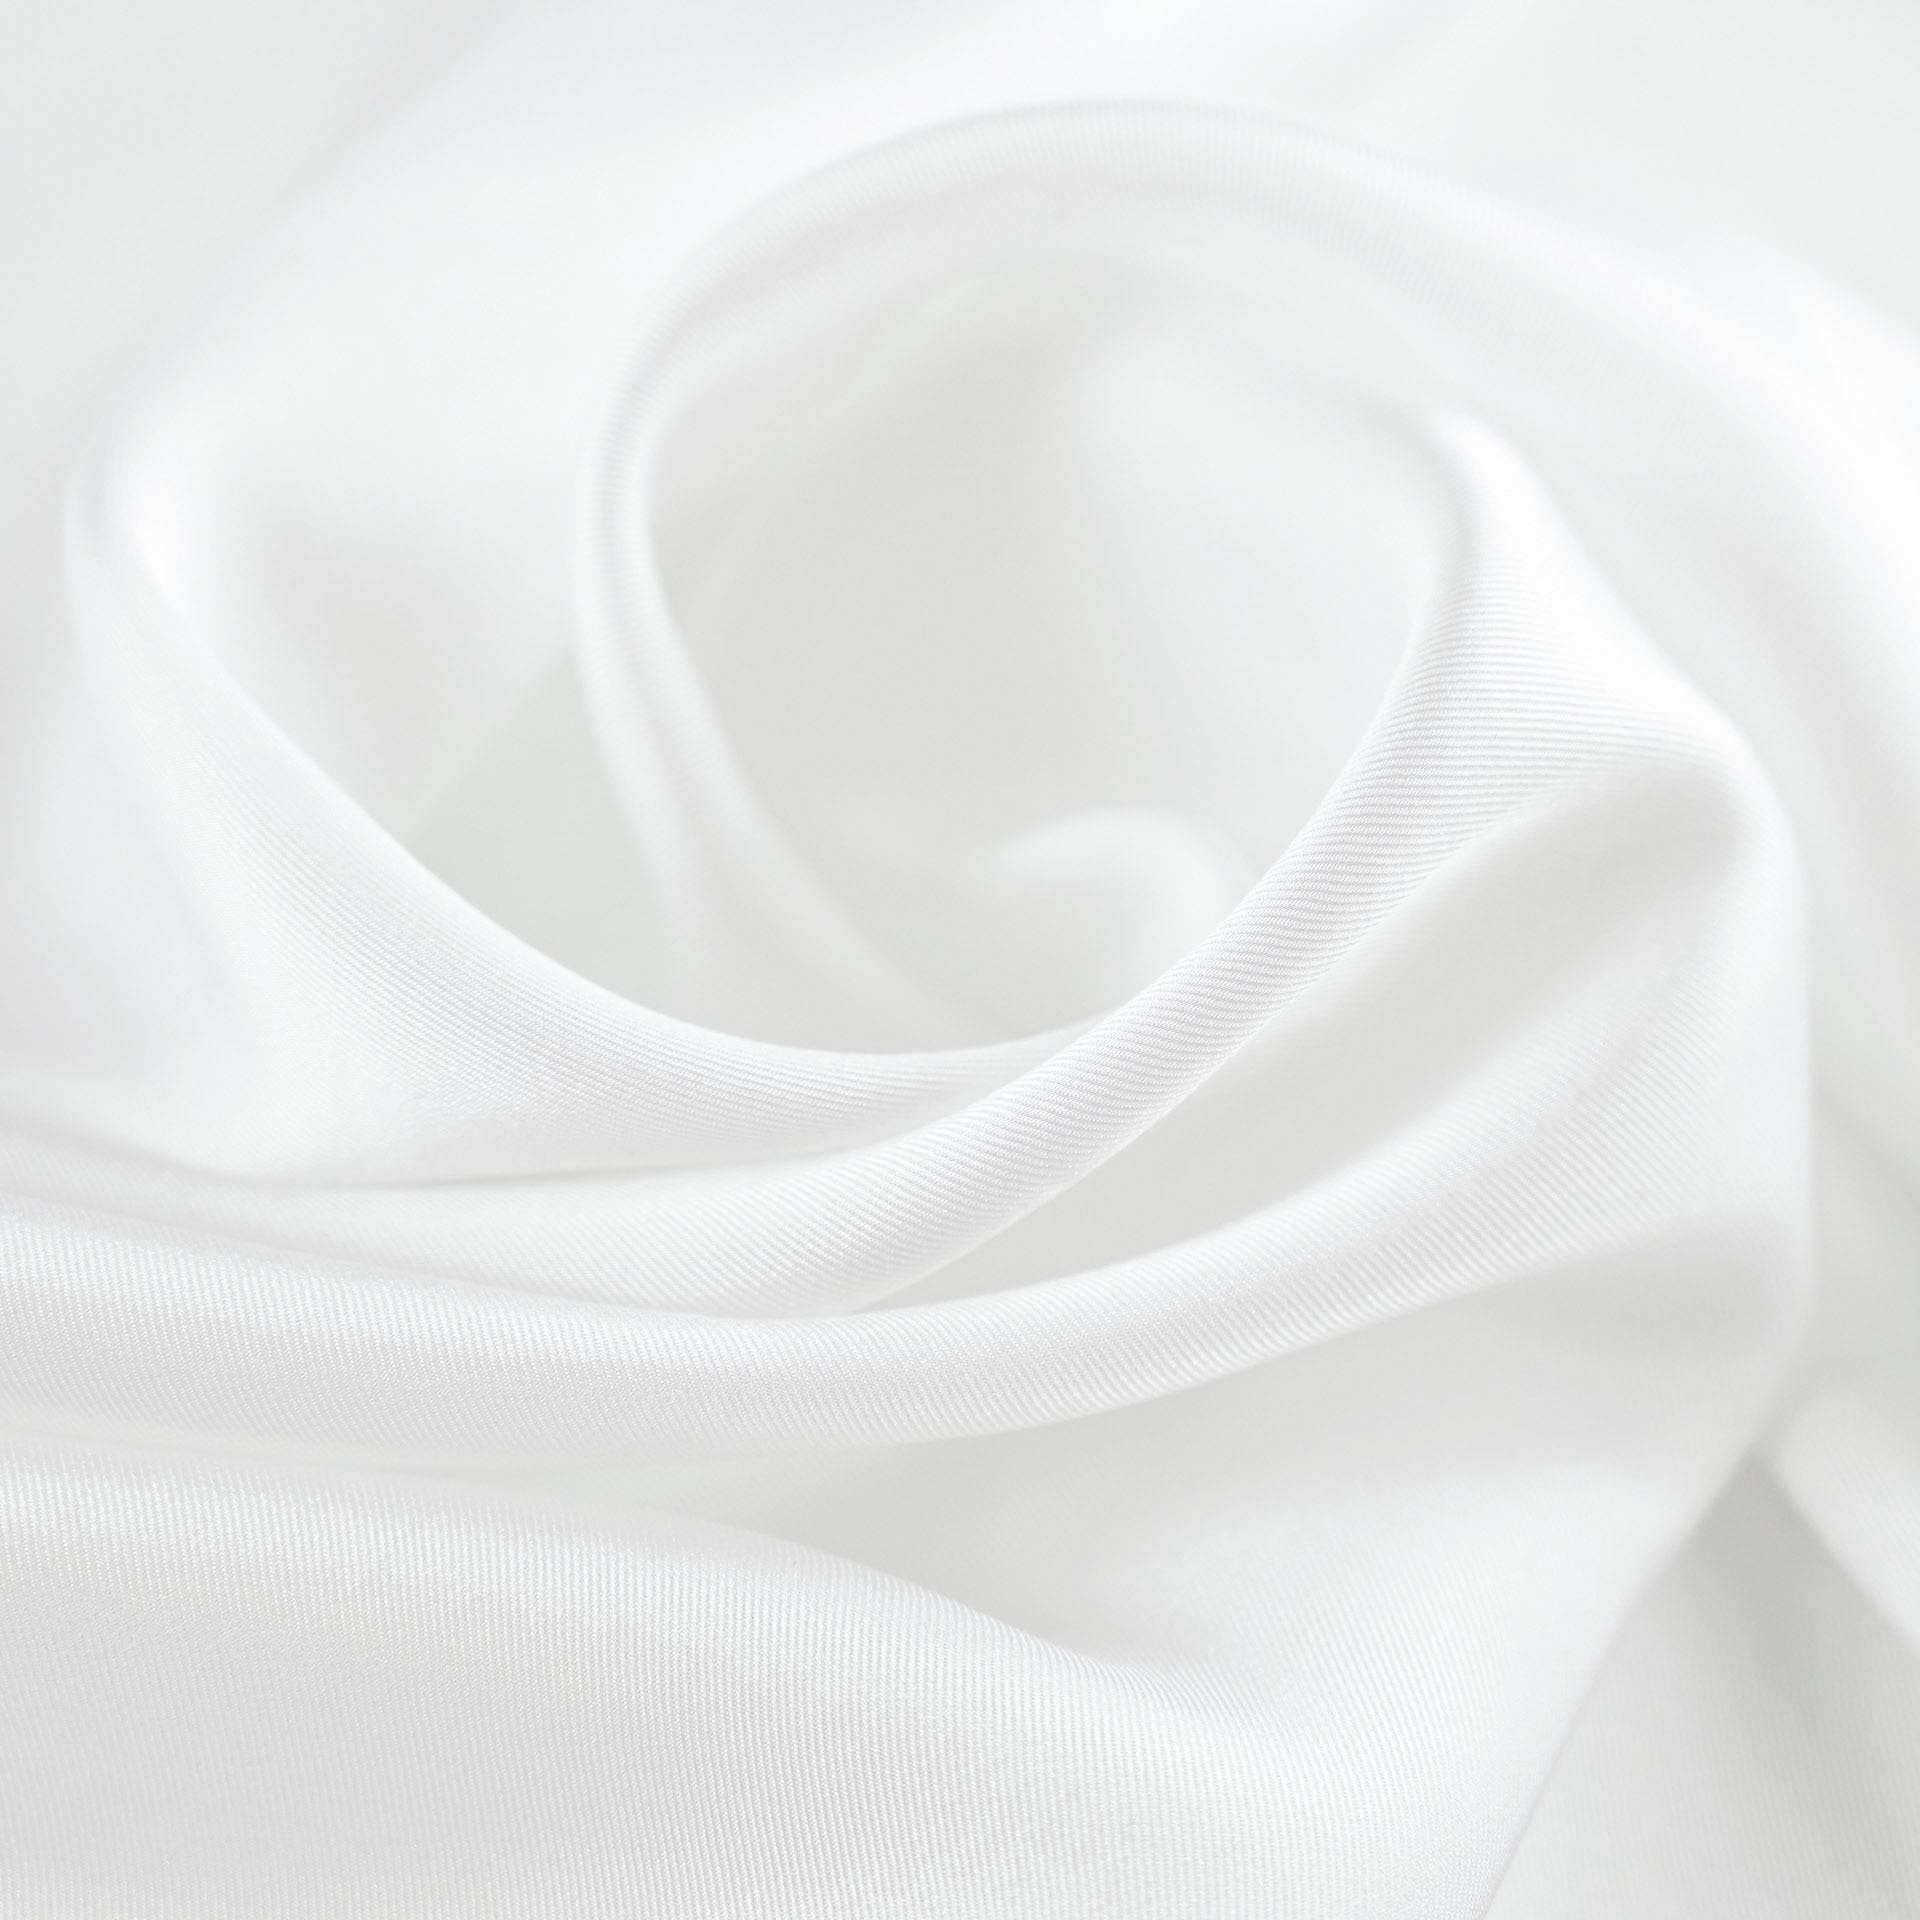 White Lightweight Fabric